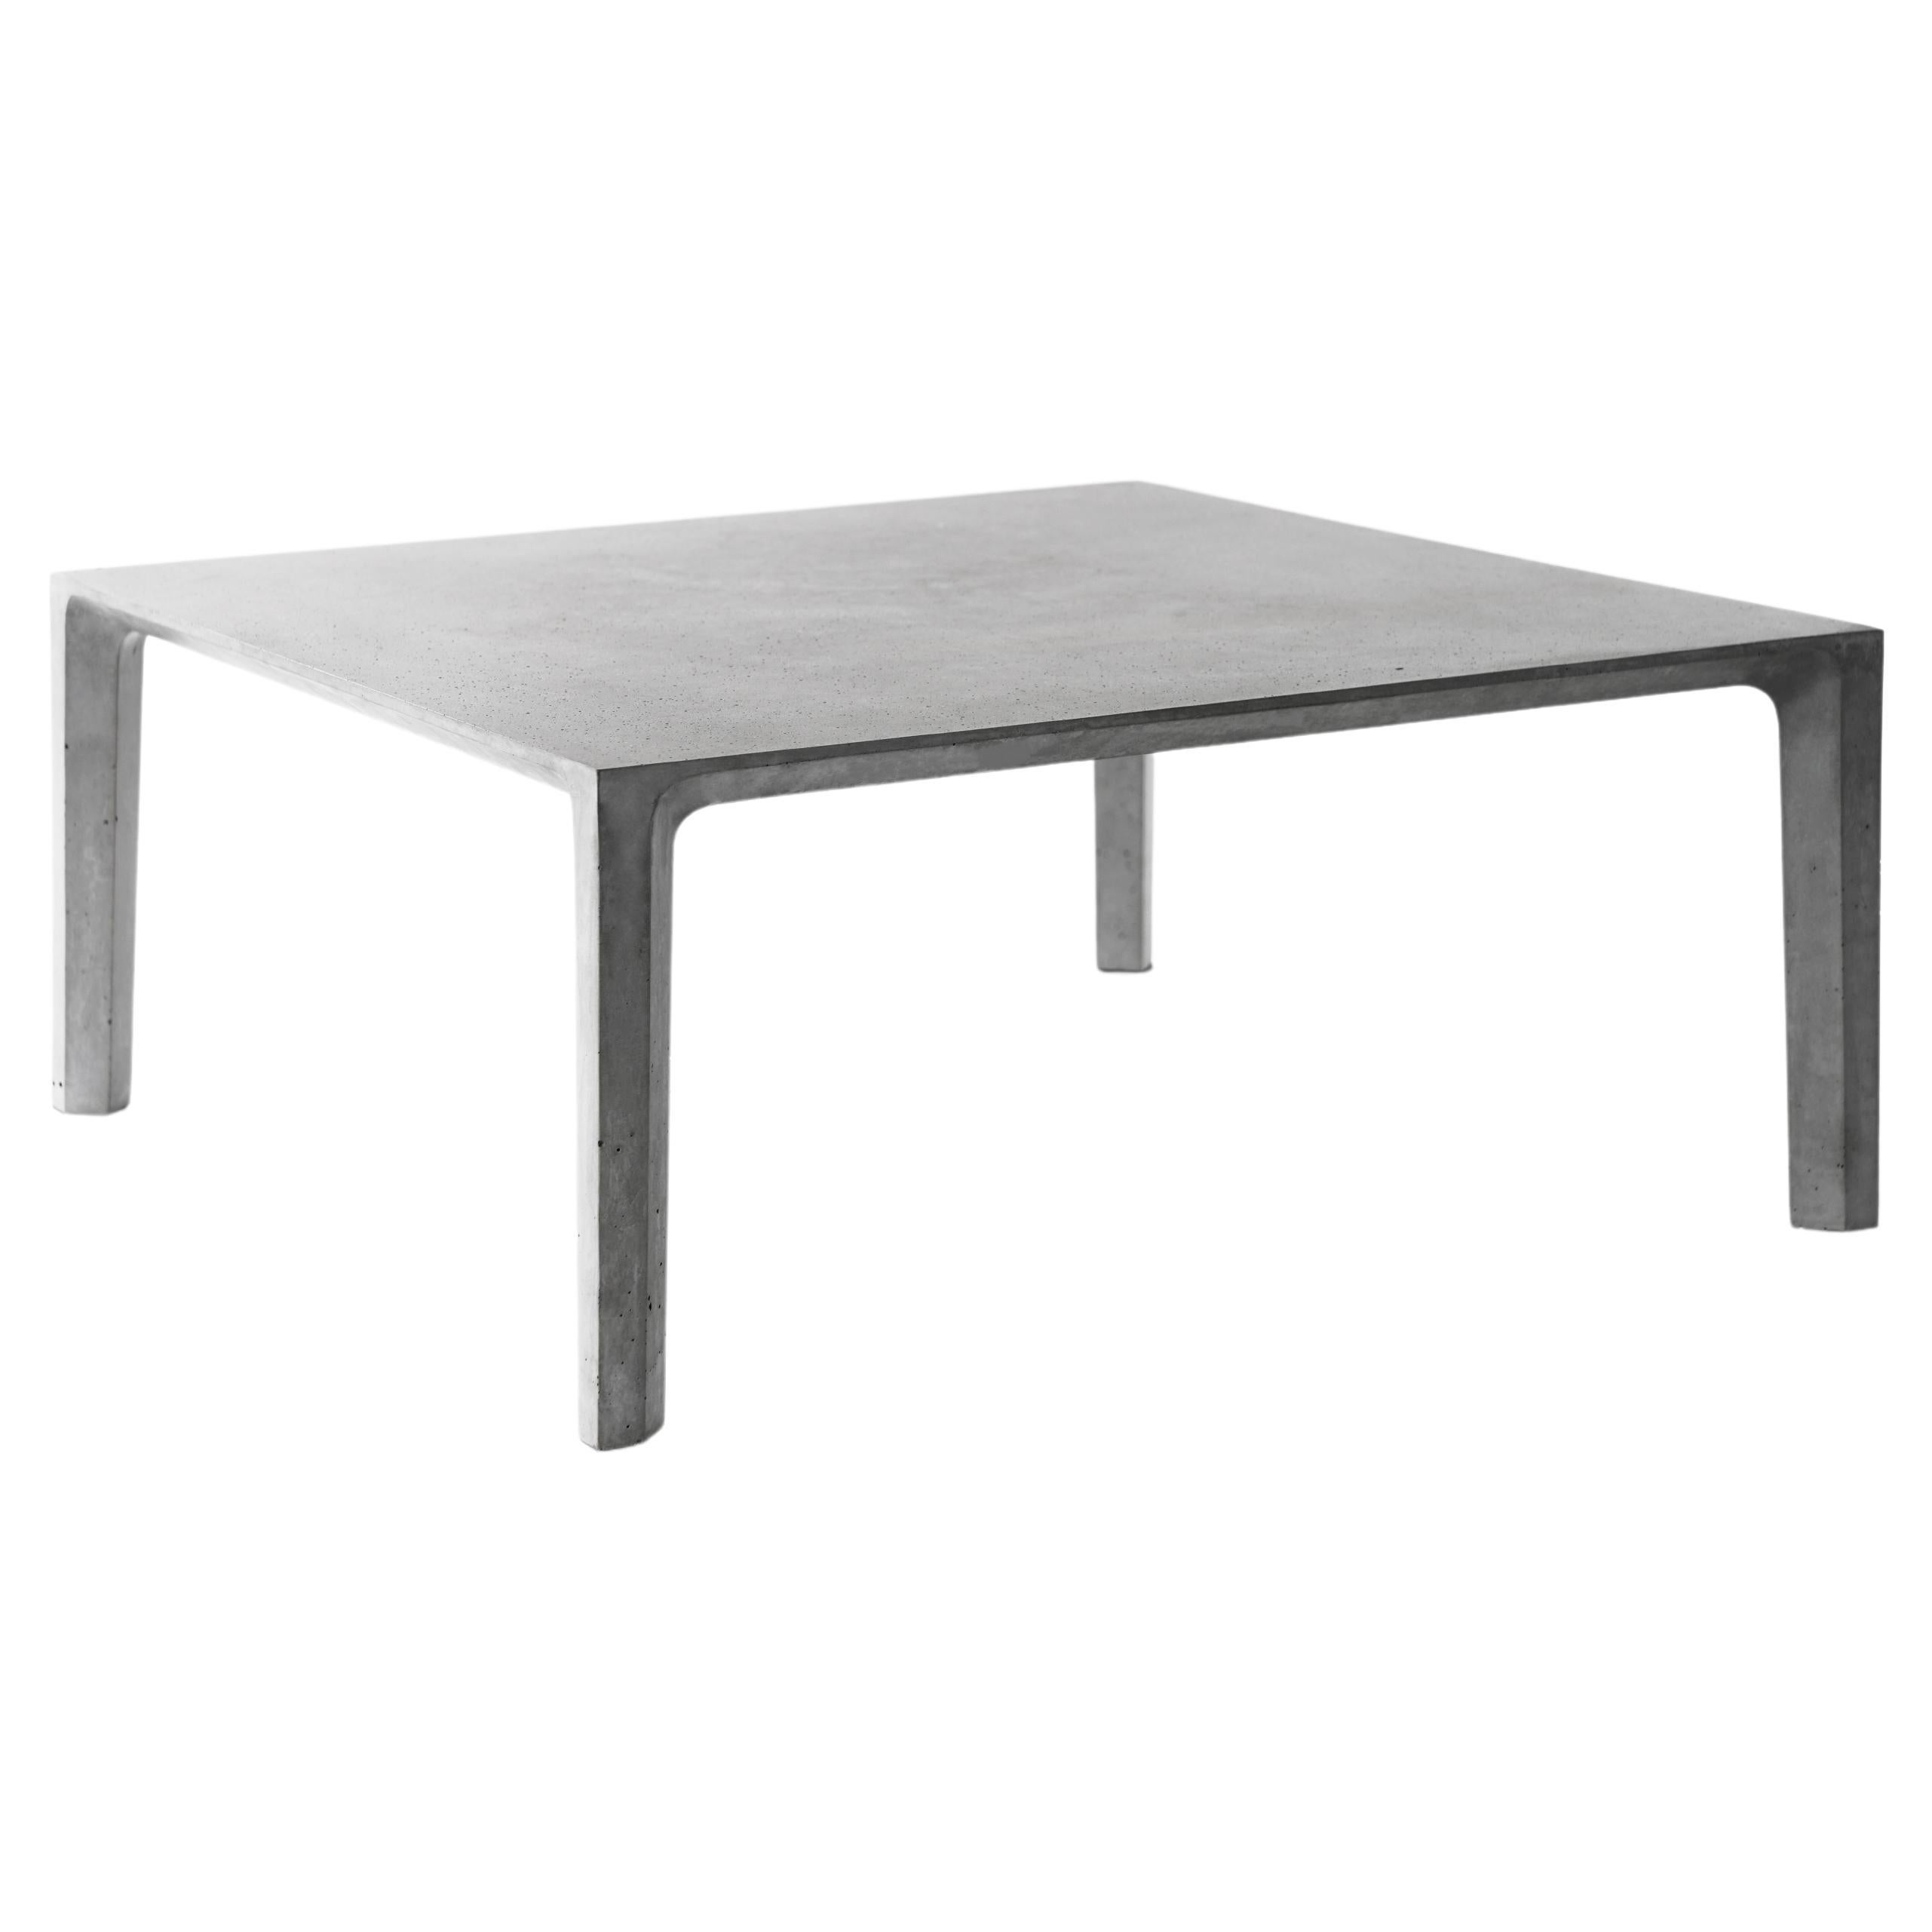 Bentu Design Side Tables